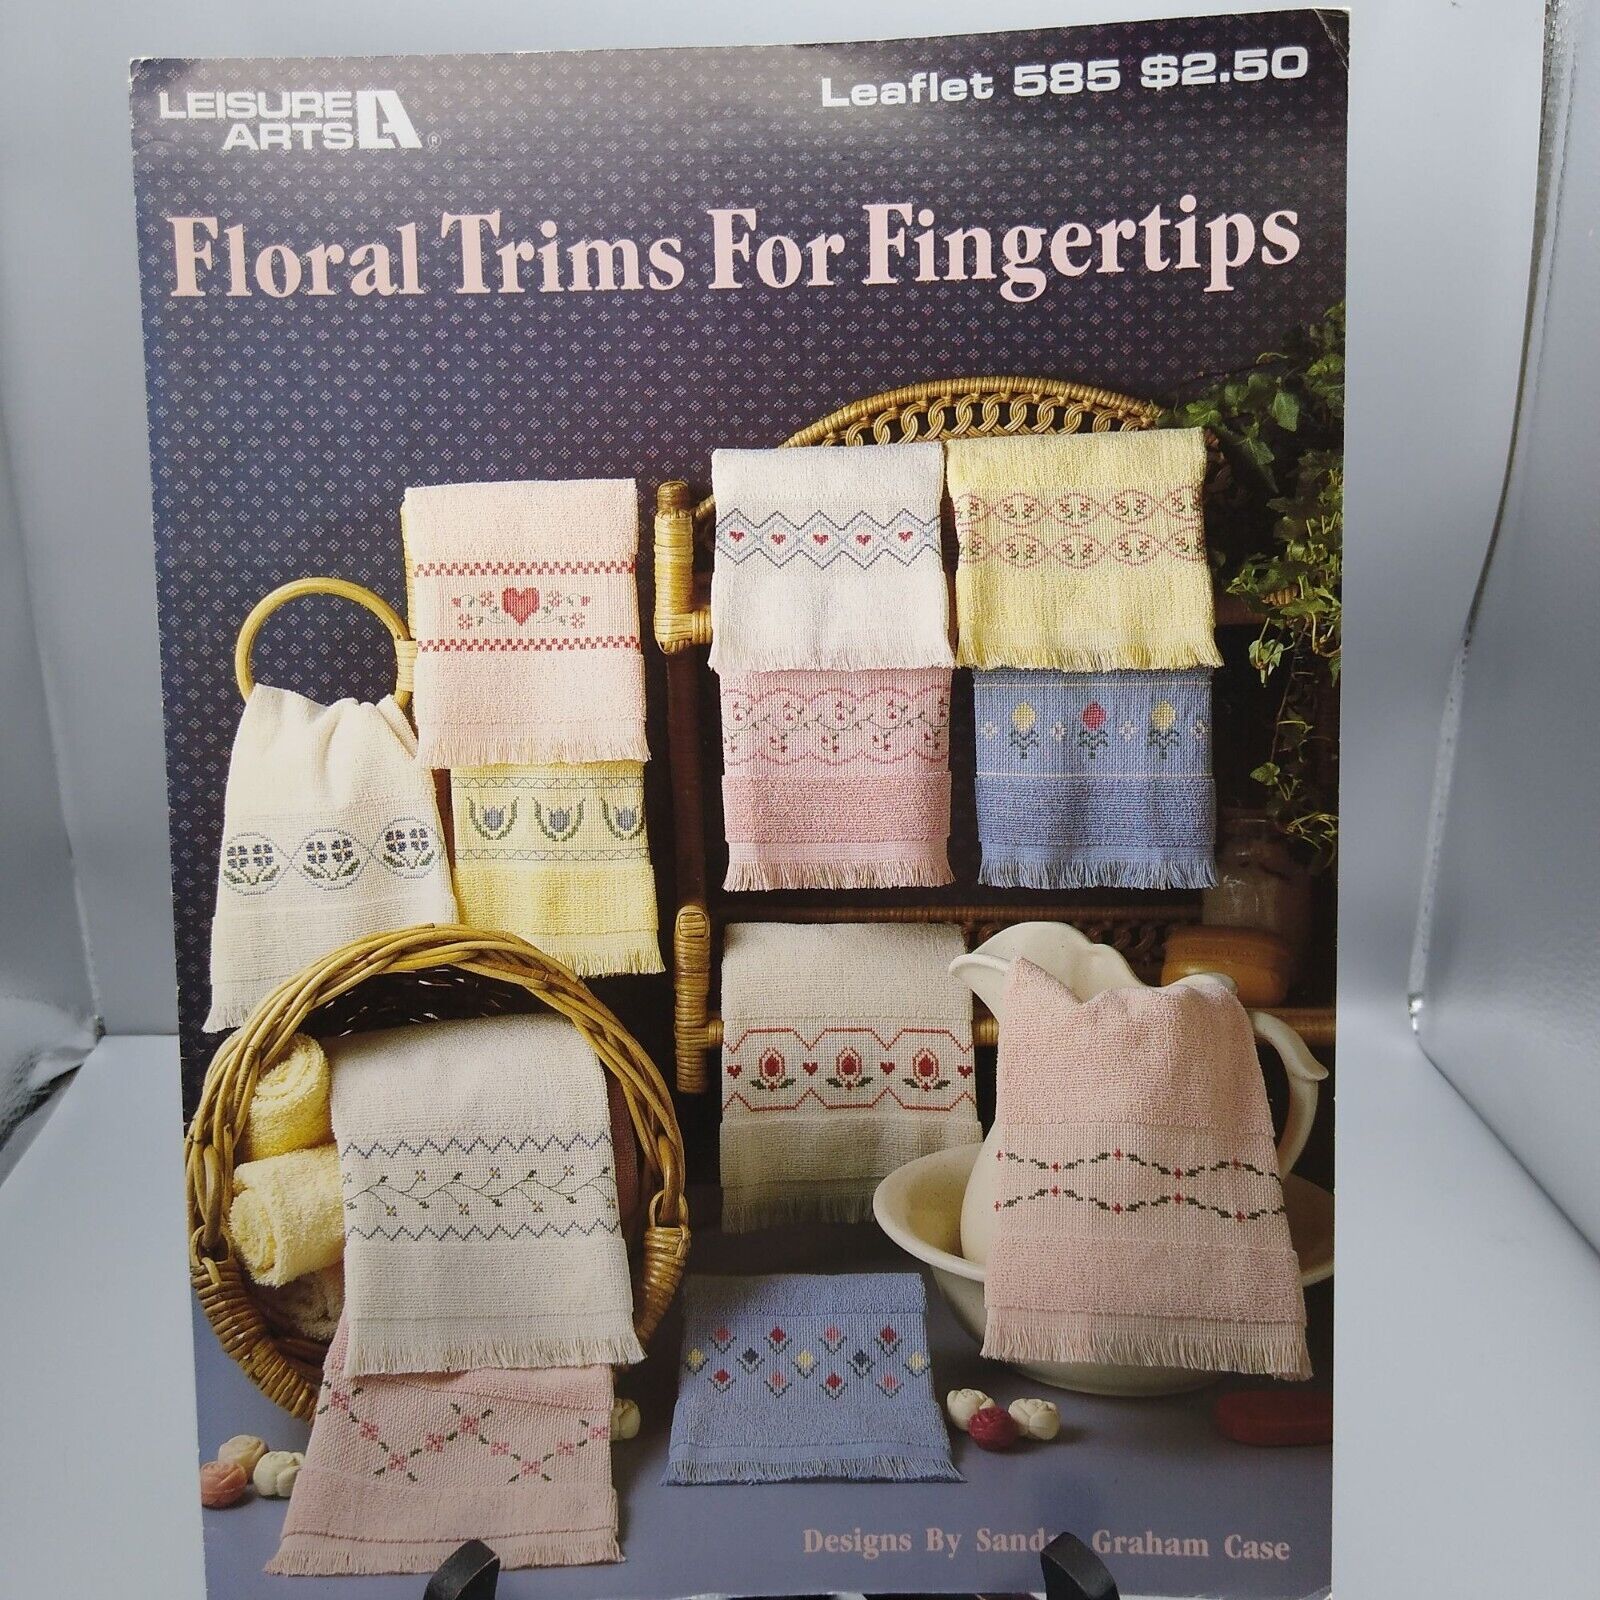 Vintage Cross Stitch Patterns, Floral Trims for Fingertips by Sandra Graham Case - $7.85